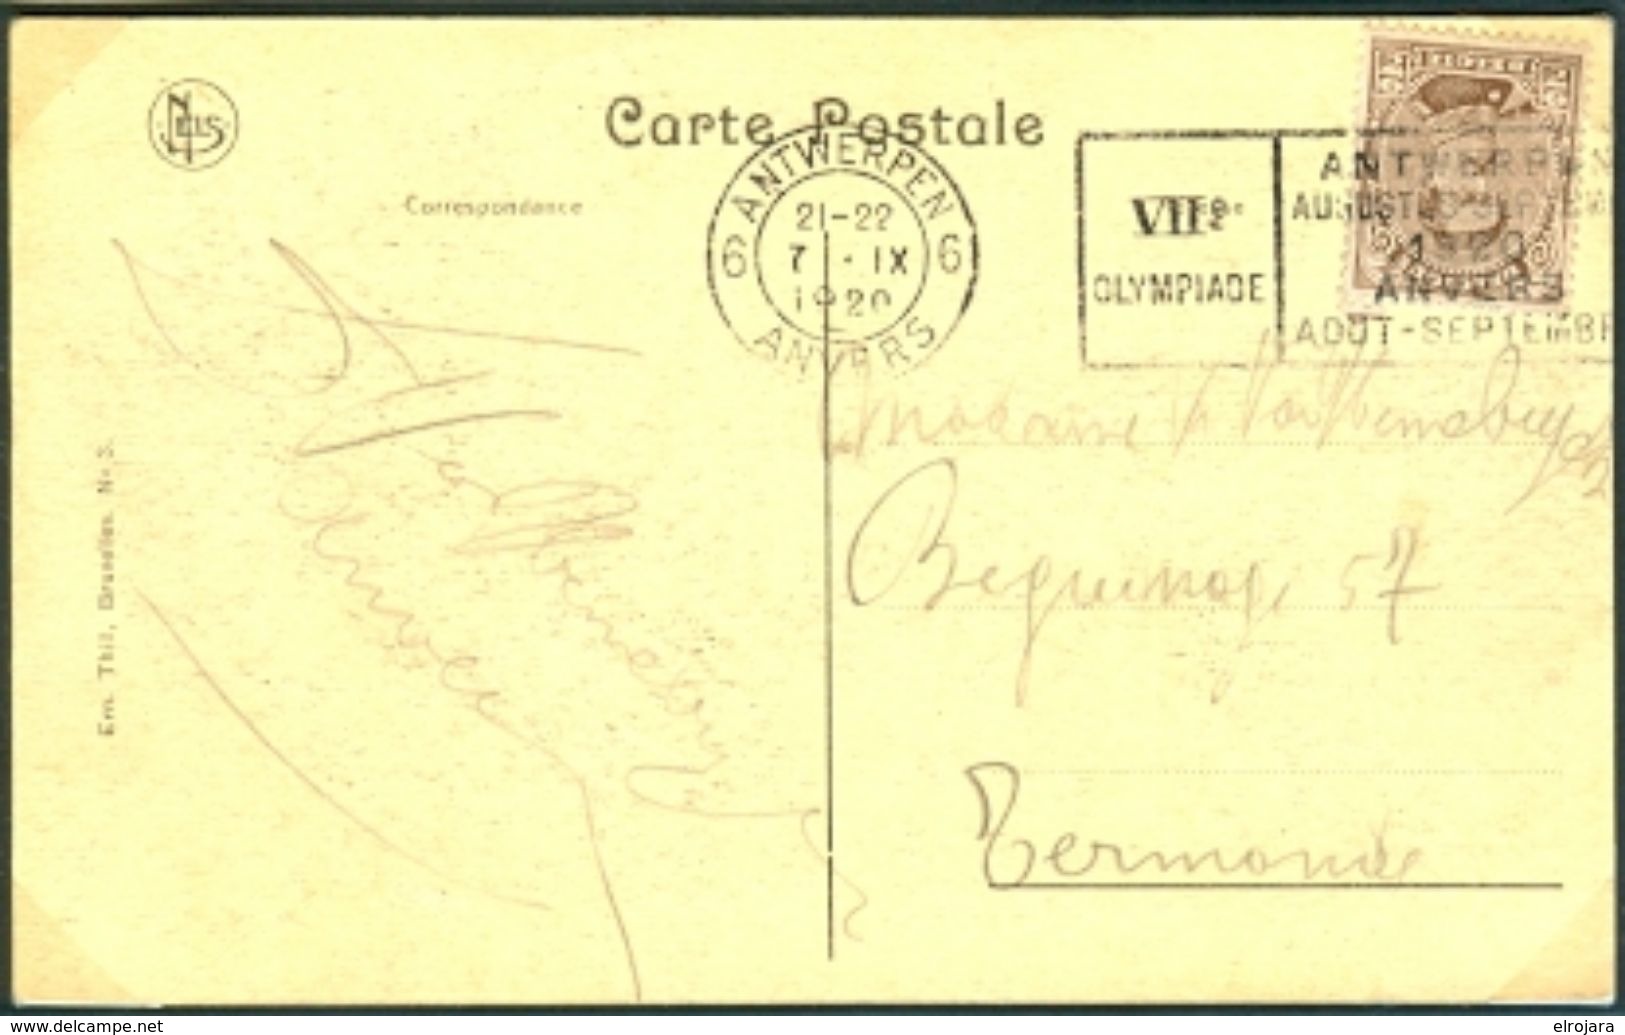 BELGIUM Postcard With Olympic Machine Cancel Antwerpen 6 Anvers Dated 7-IX-1920 Equestrian Day - Estate 1920: Anversa